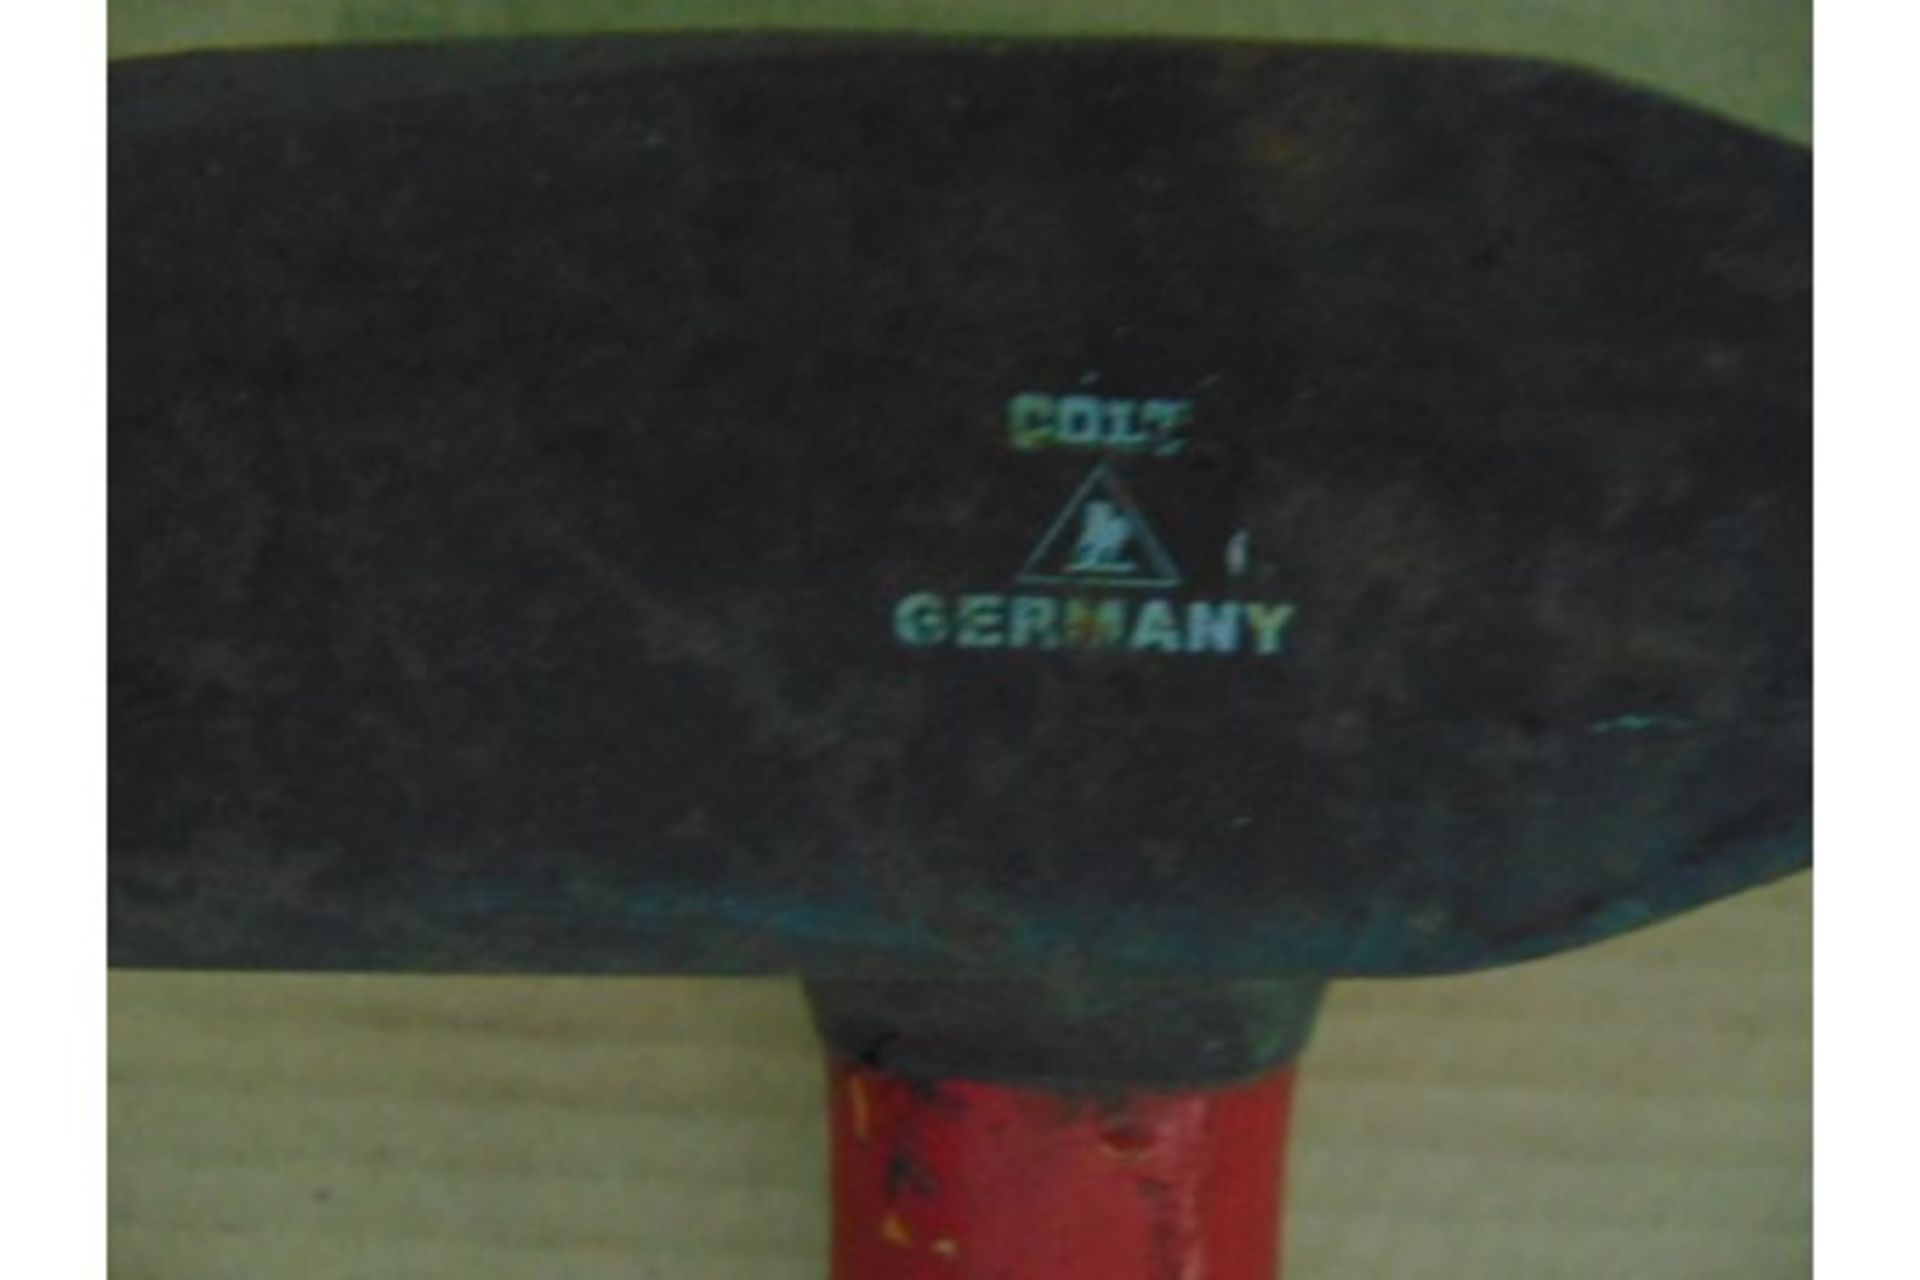 4 x Colt Germany Sledge Hammers - Bild 3 aus 3